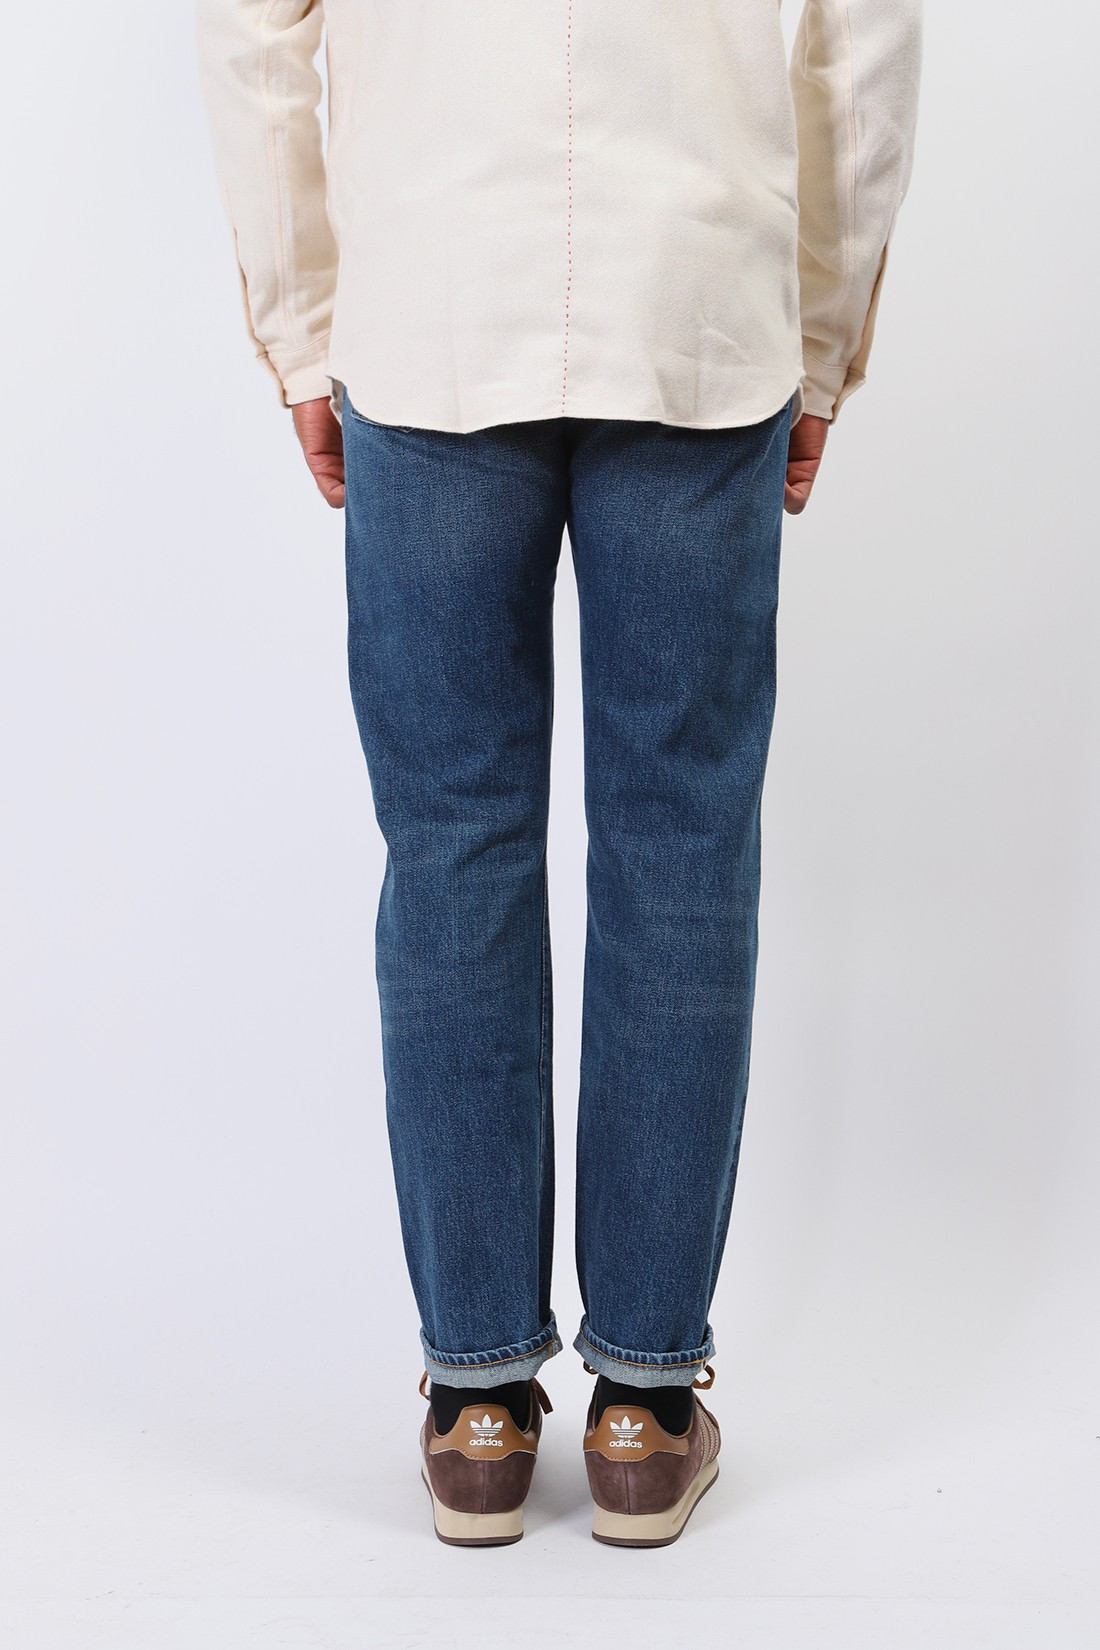 LEVI'S ® VINTAGE CLOTHING / 1954 501 jeans Still breath